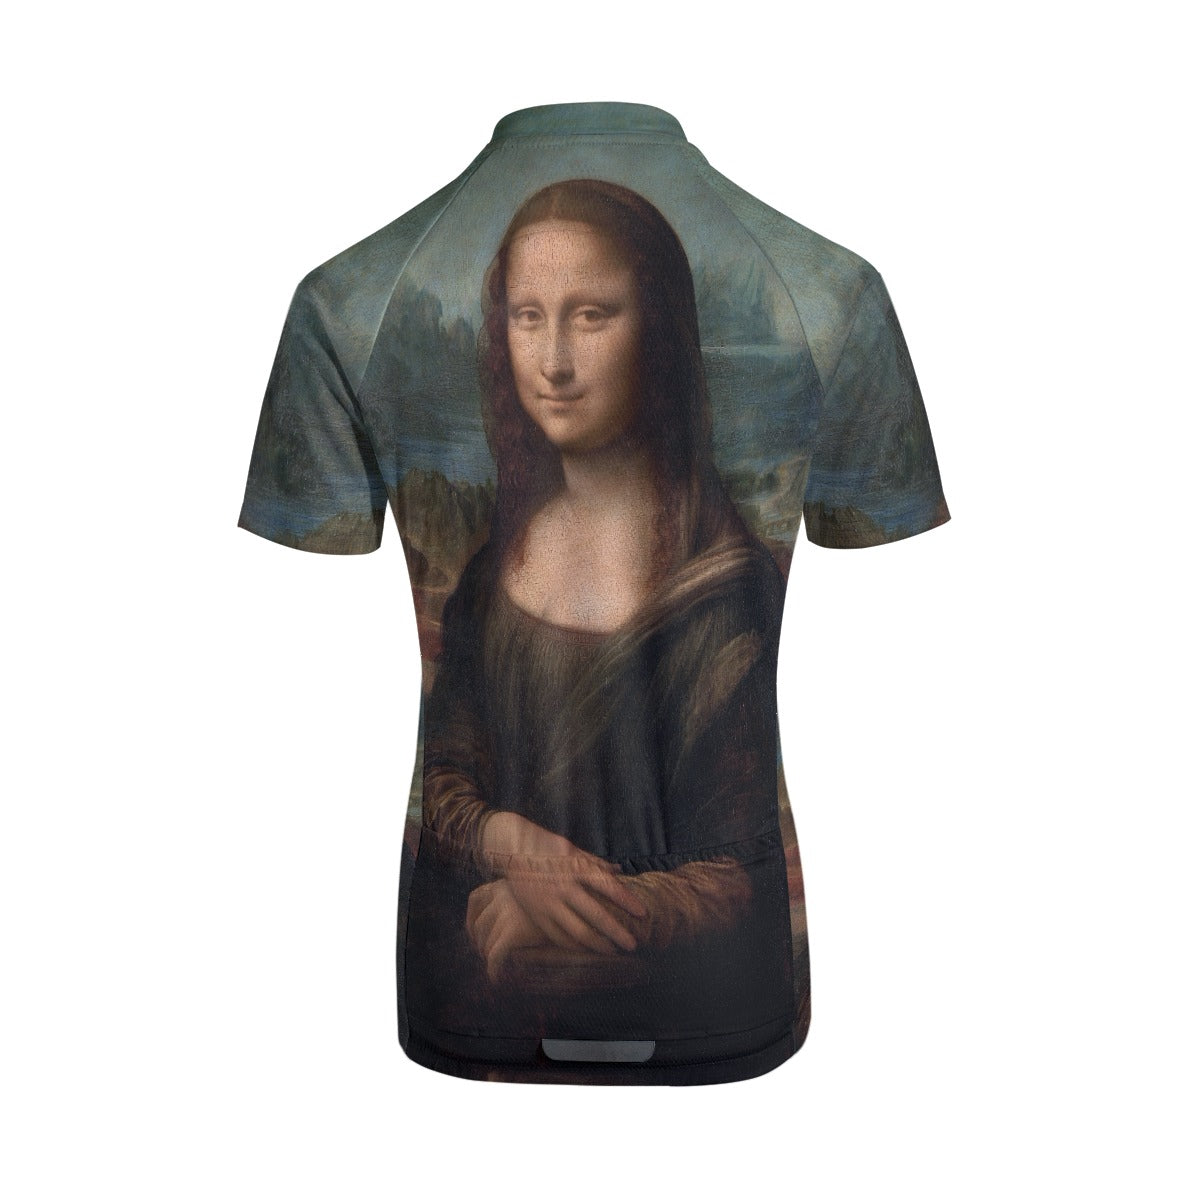 Vibrant Mona Lisa print on premium fabric